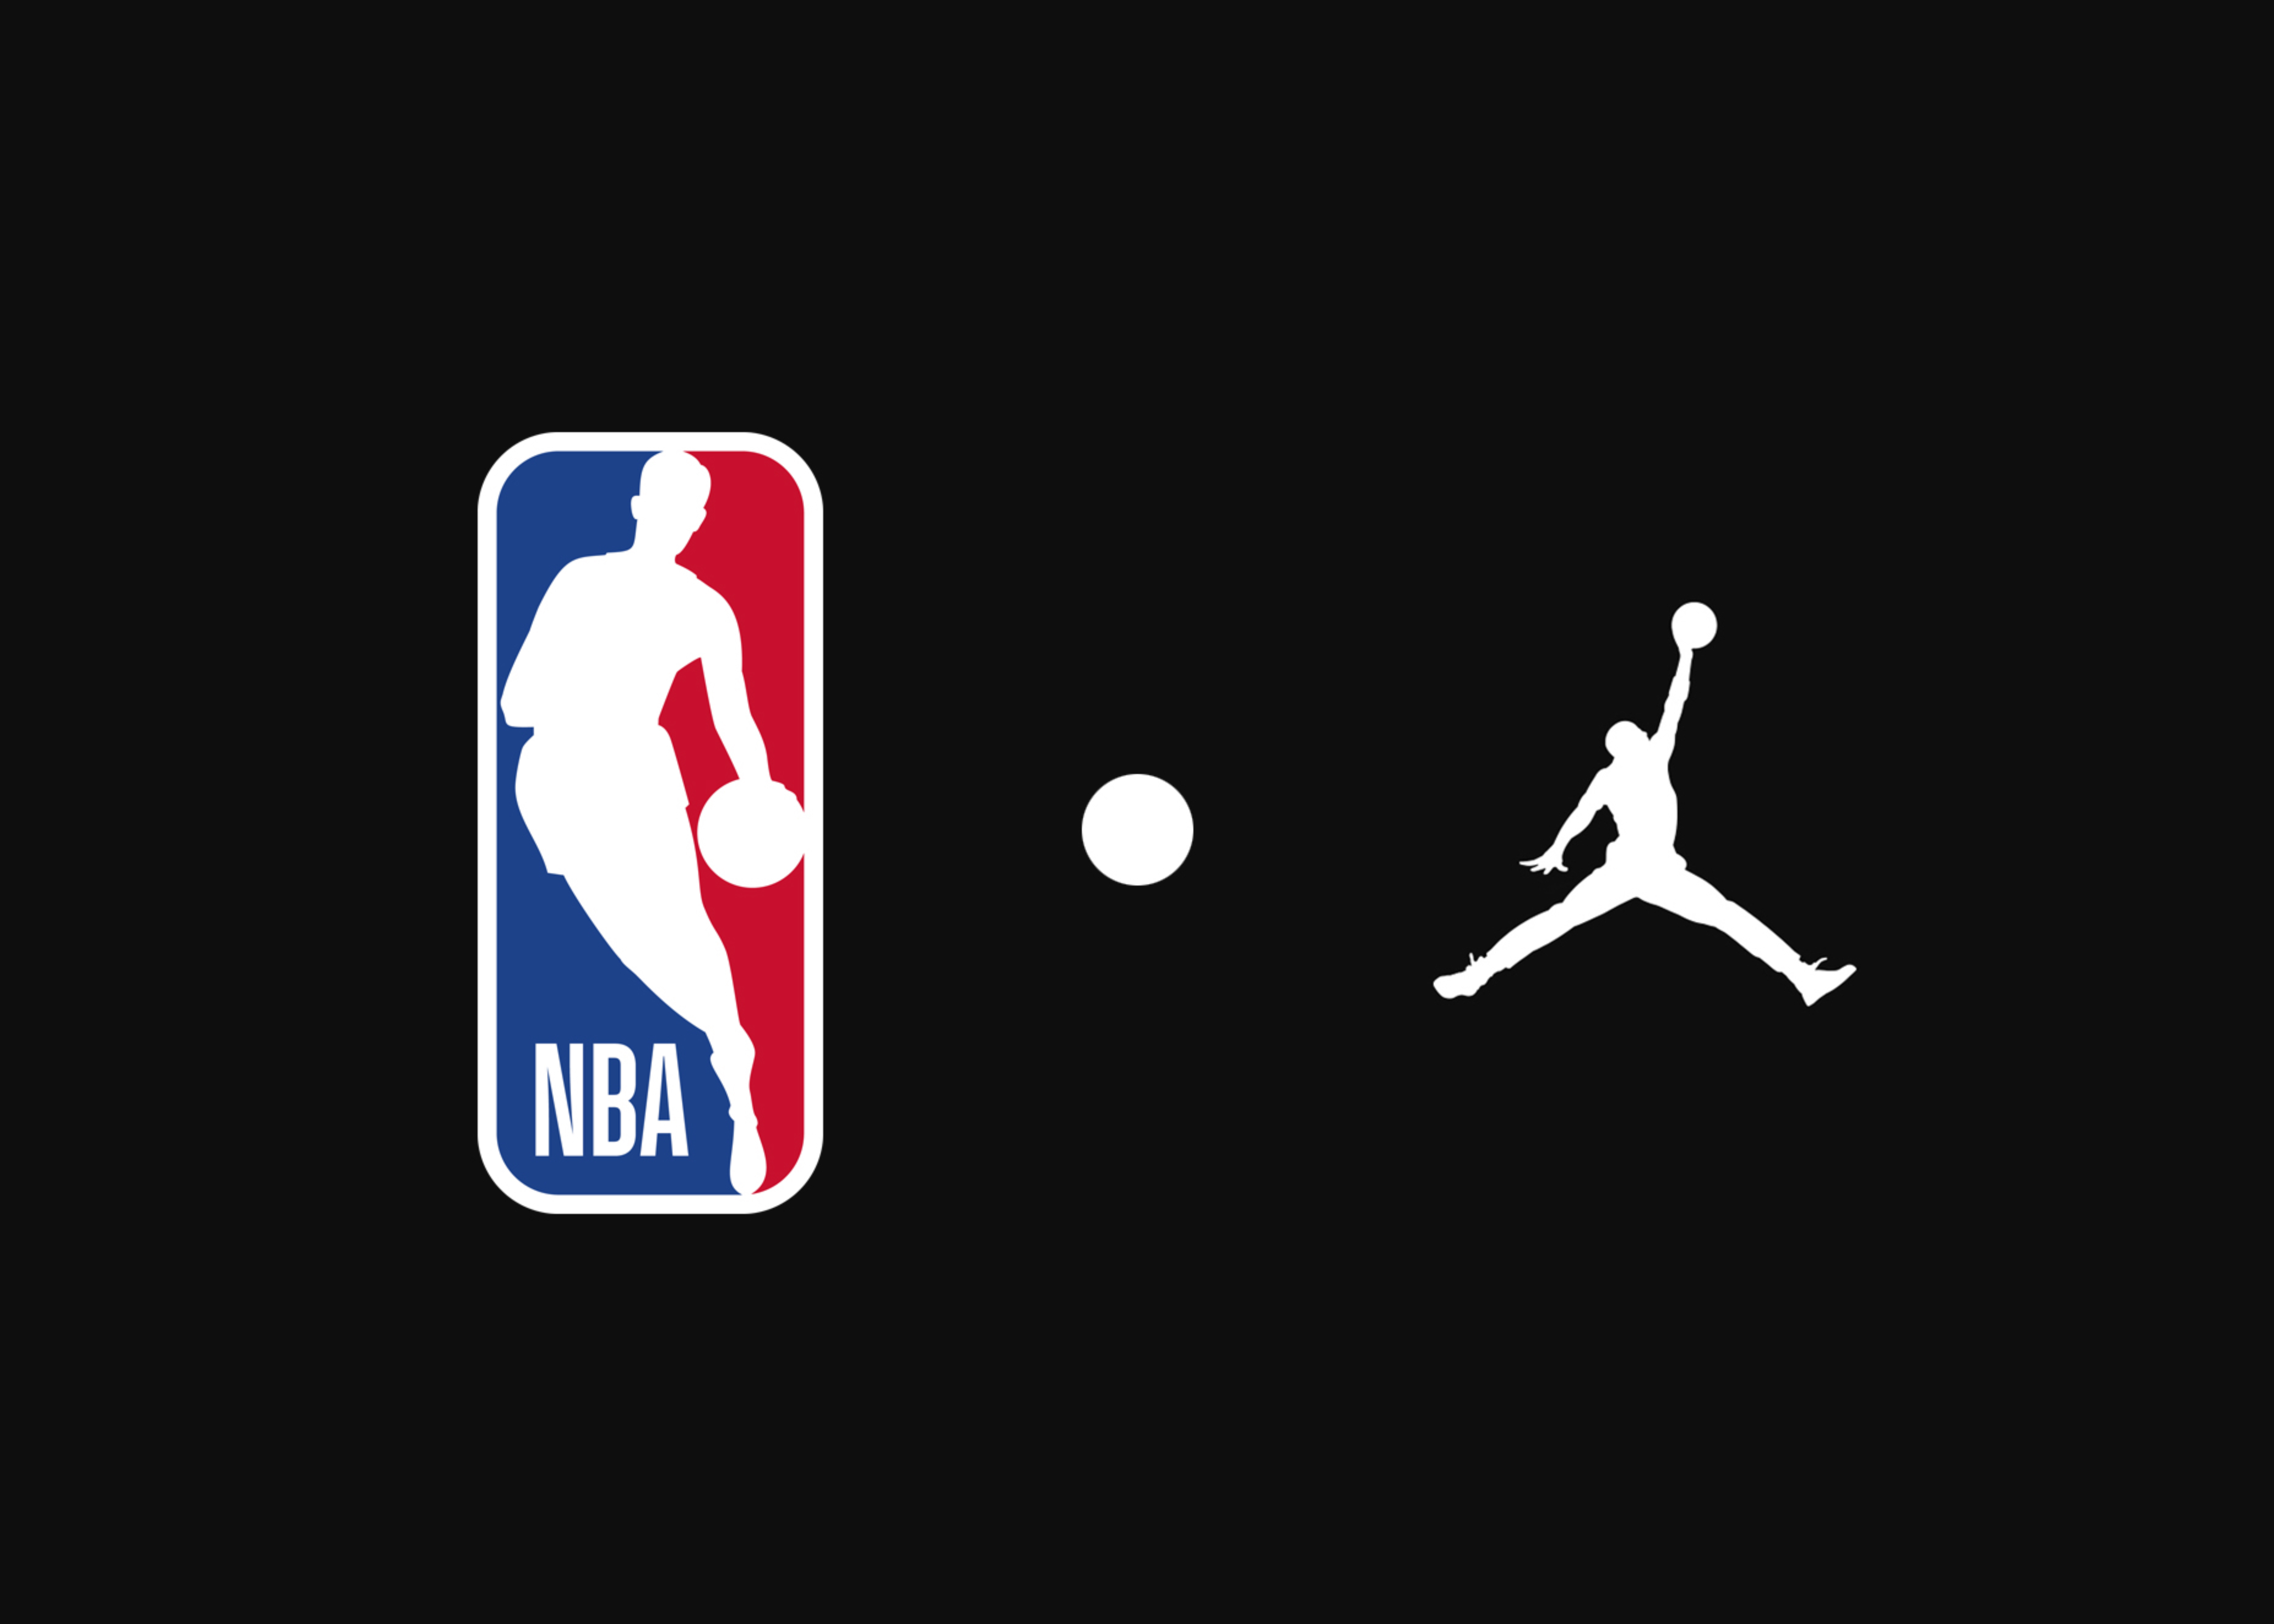 Jordan品牌将携手NBA共同打造2020-21赛季主题版球衣